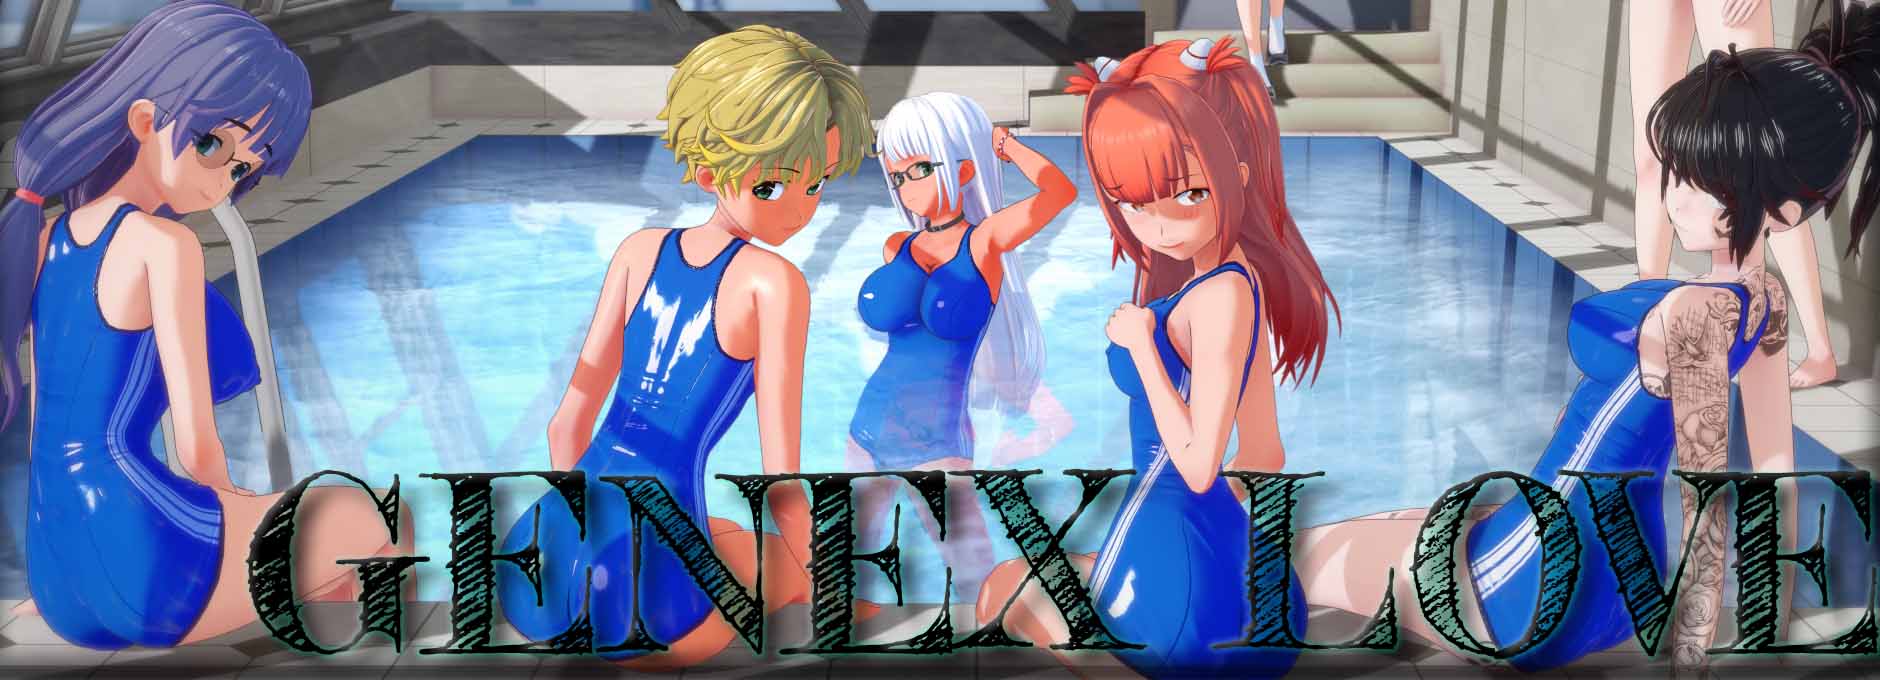 Genex Love Apk Android Adult Game Download